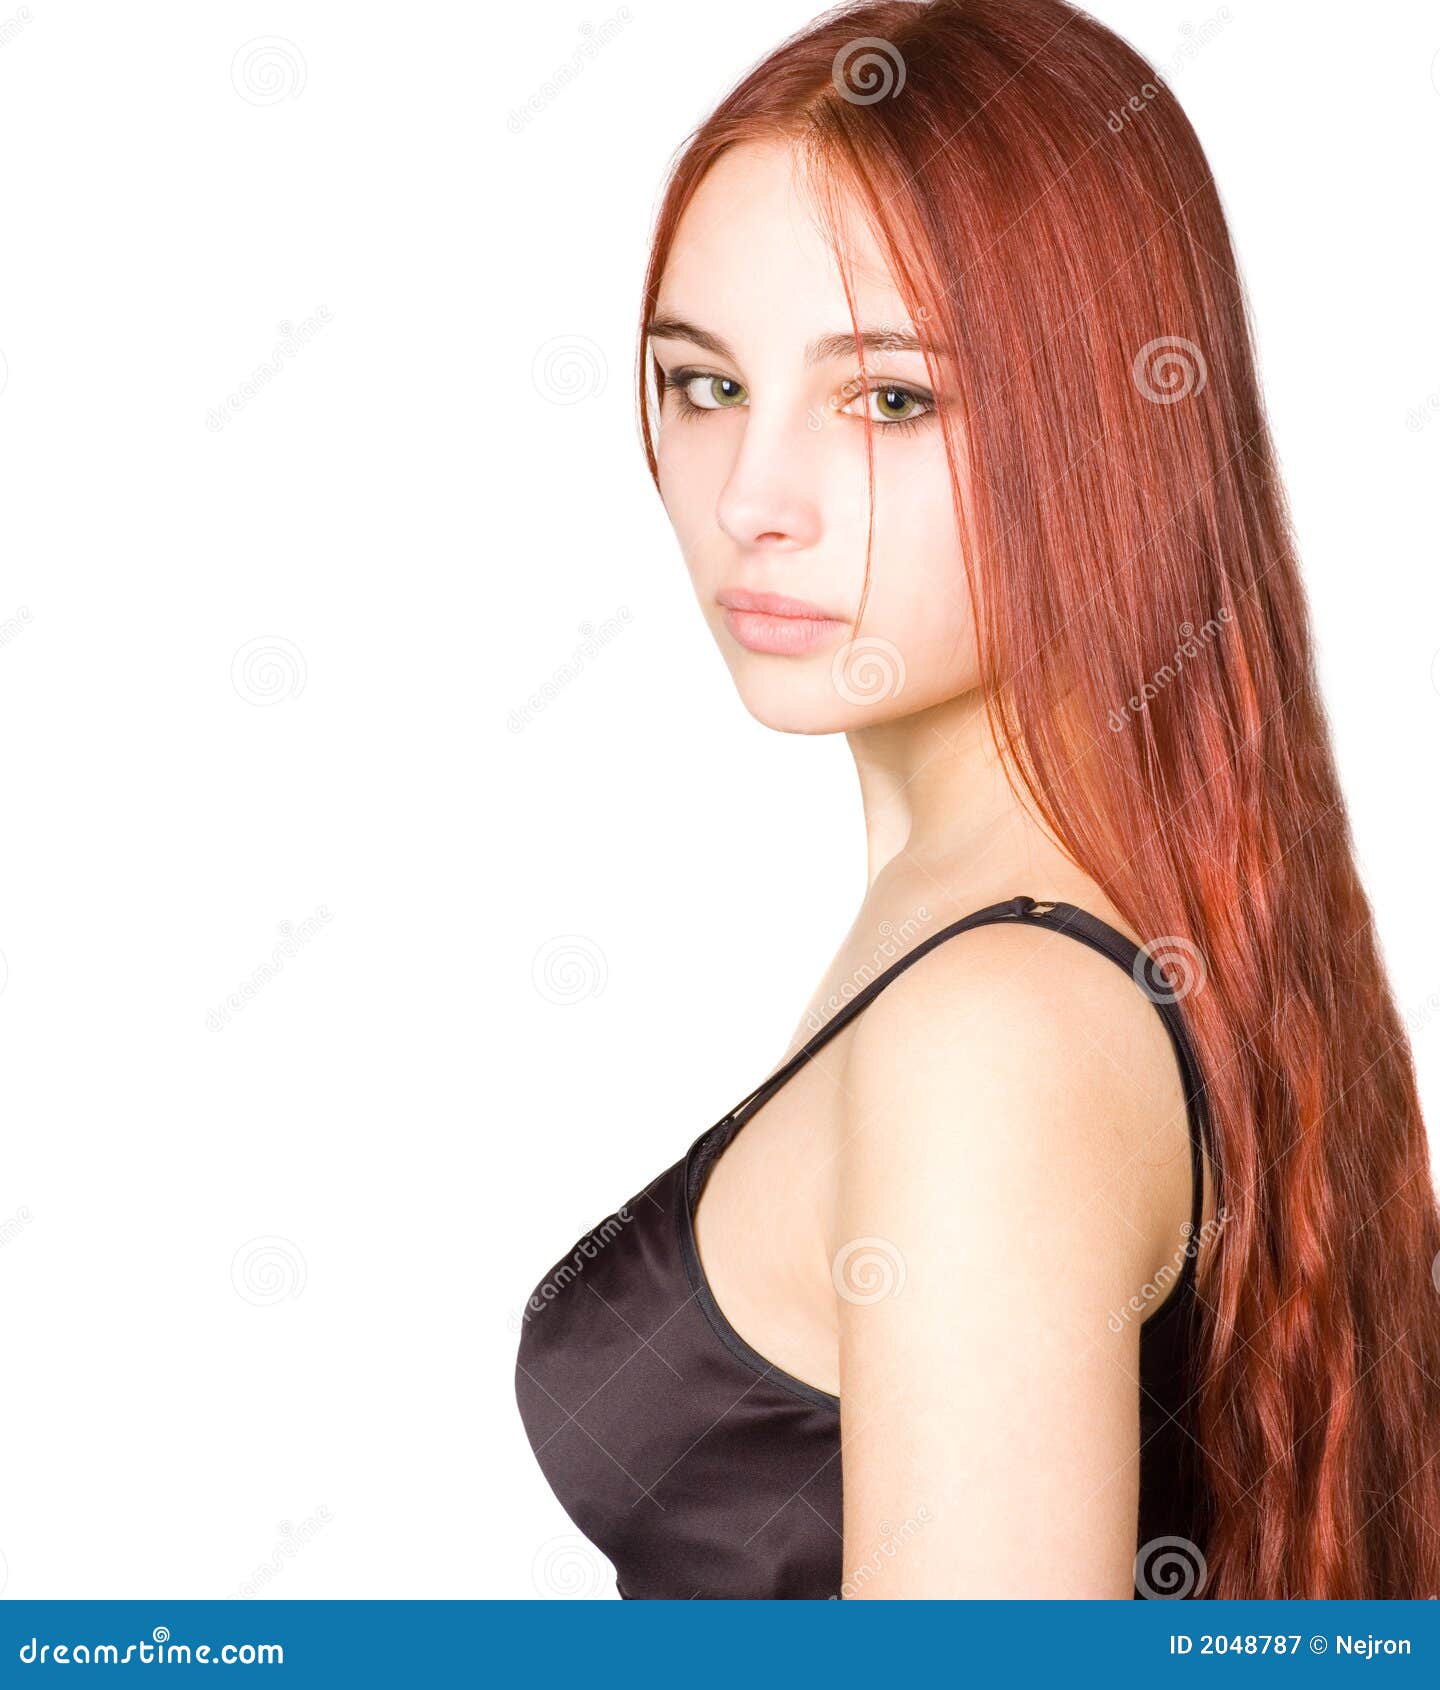 alan norfleet add photo pretty redheads with green eyes